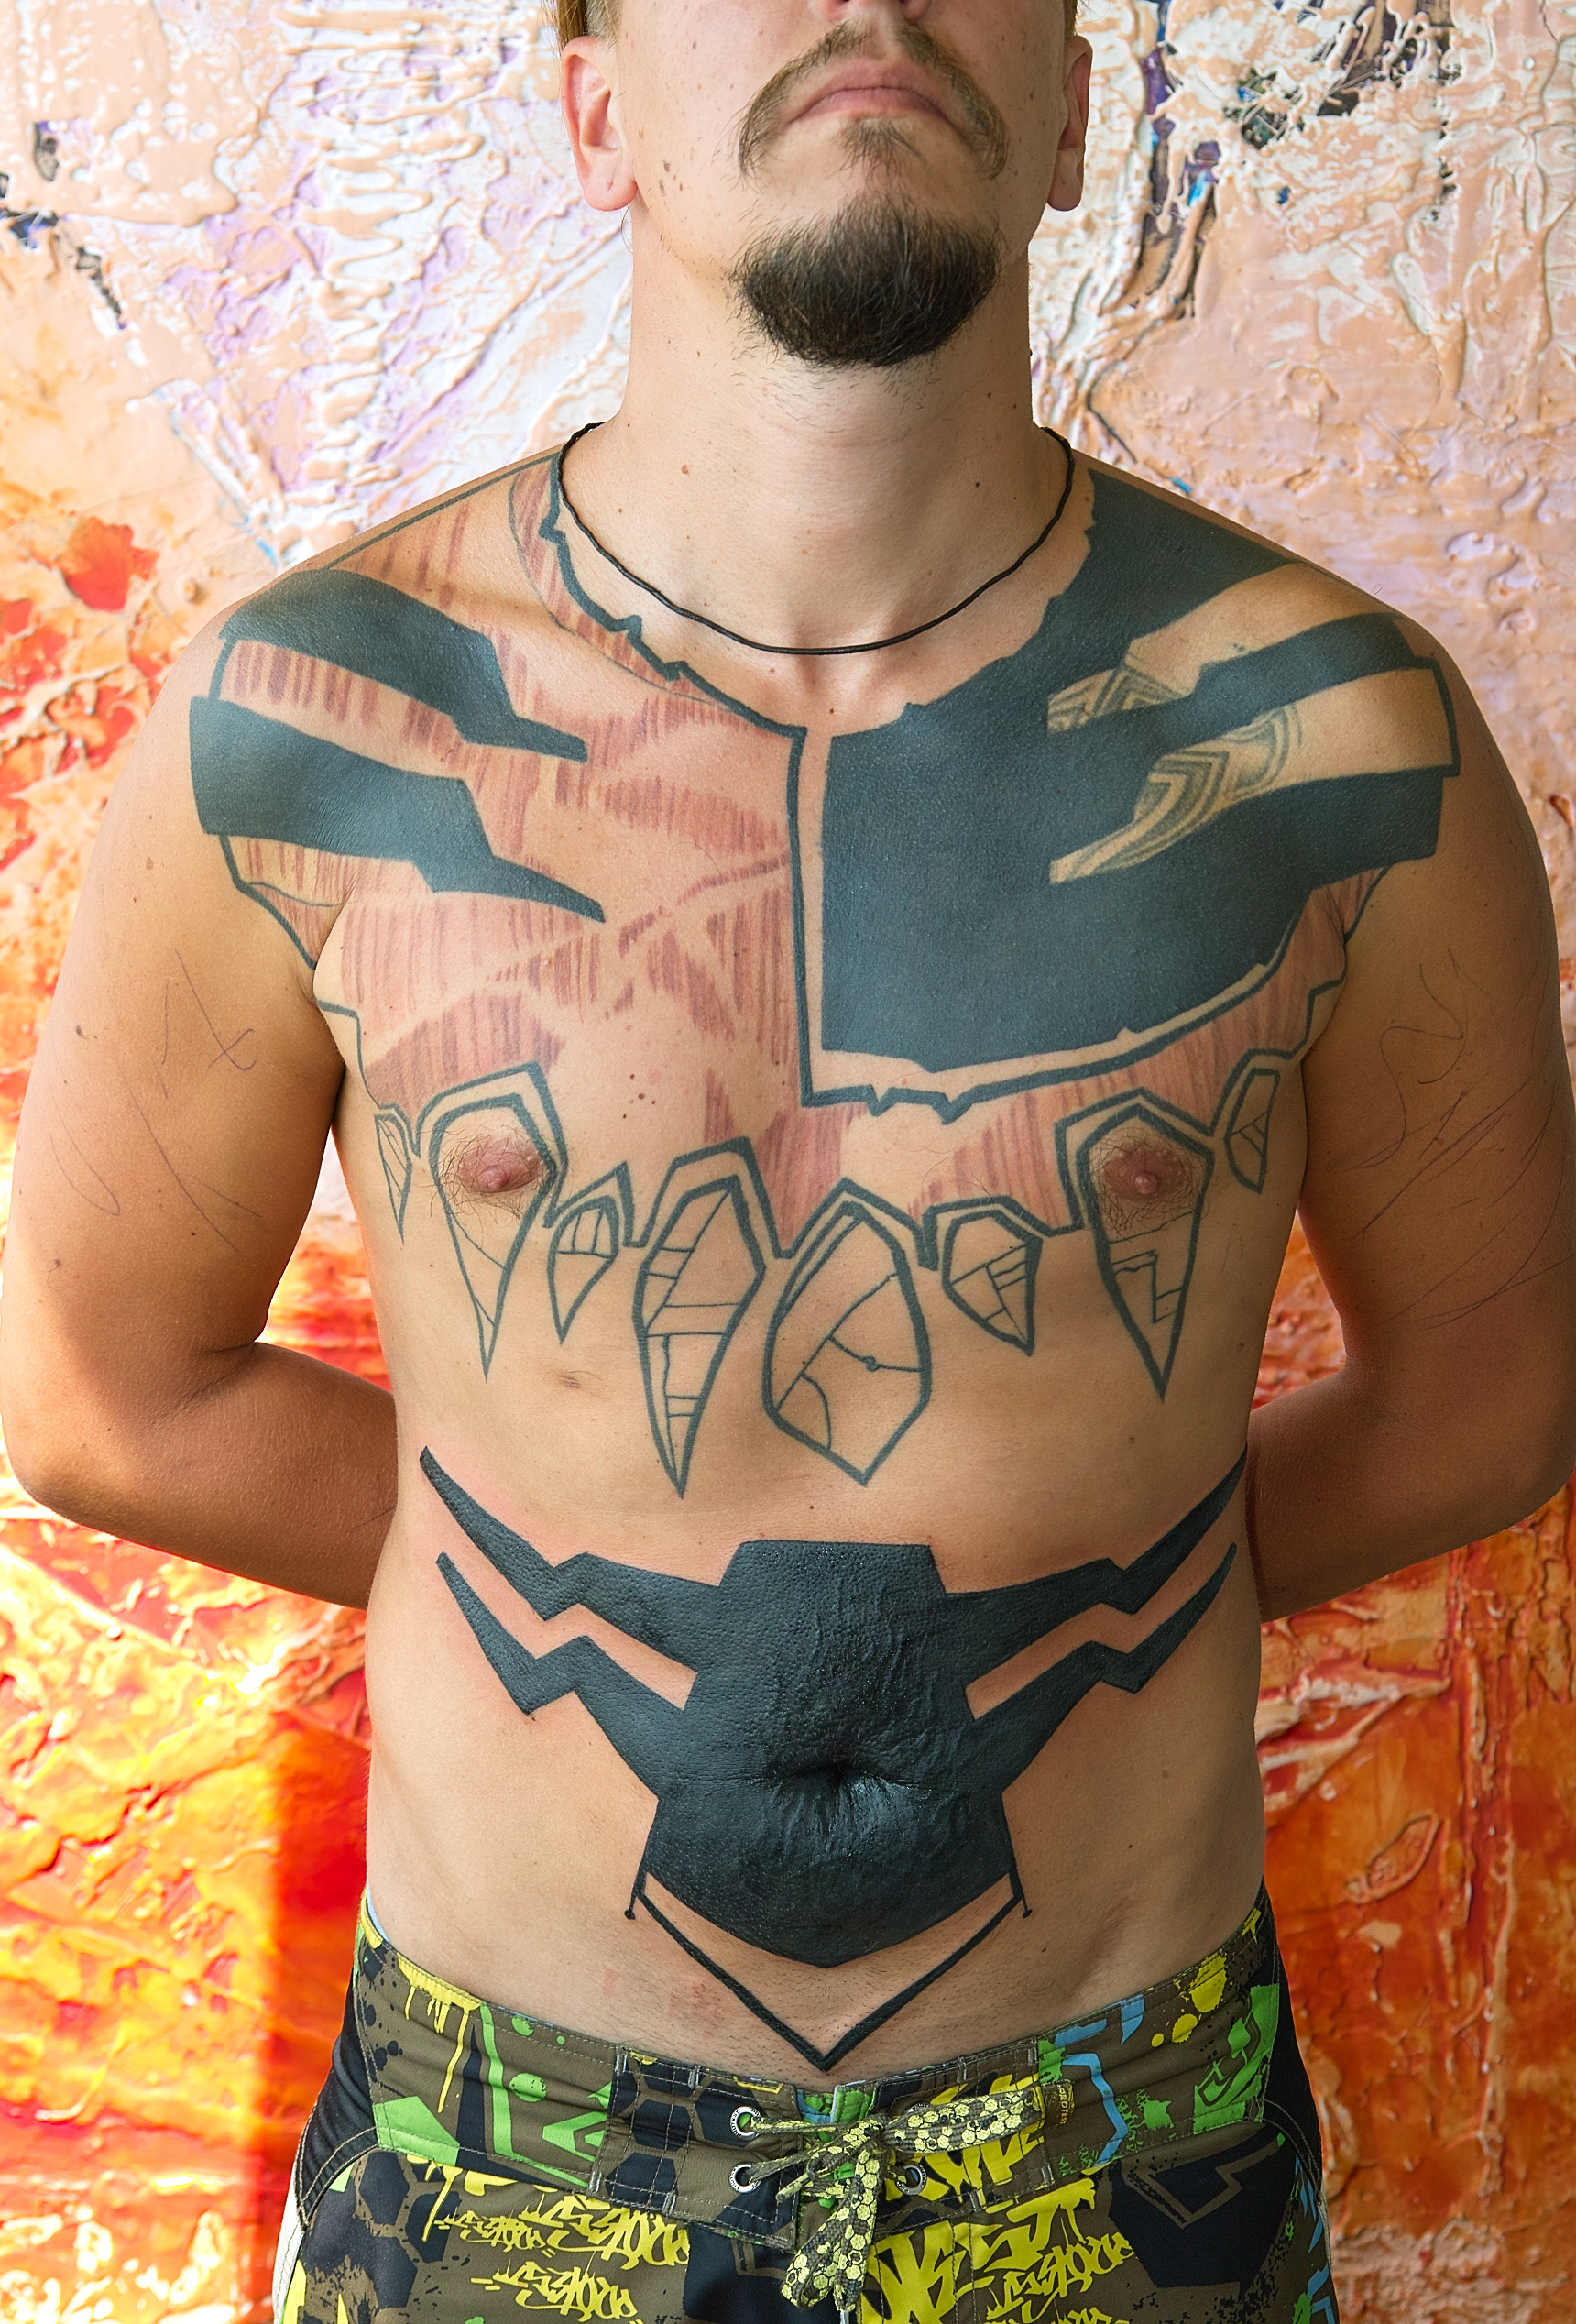 File:Tattoo-by-grisha-maslov.jpg - Wikimedia Commons